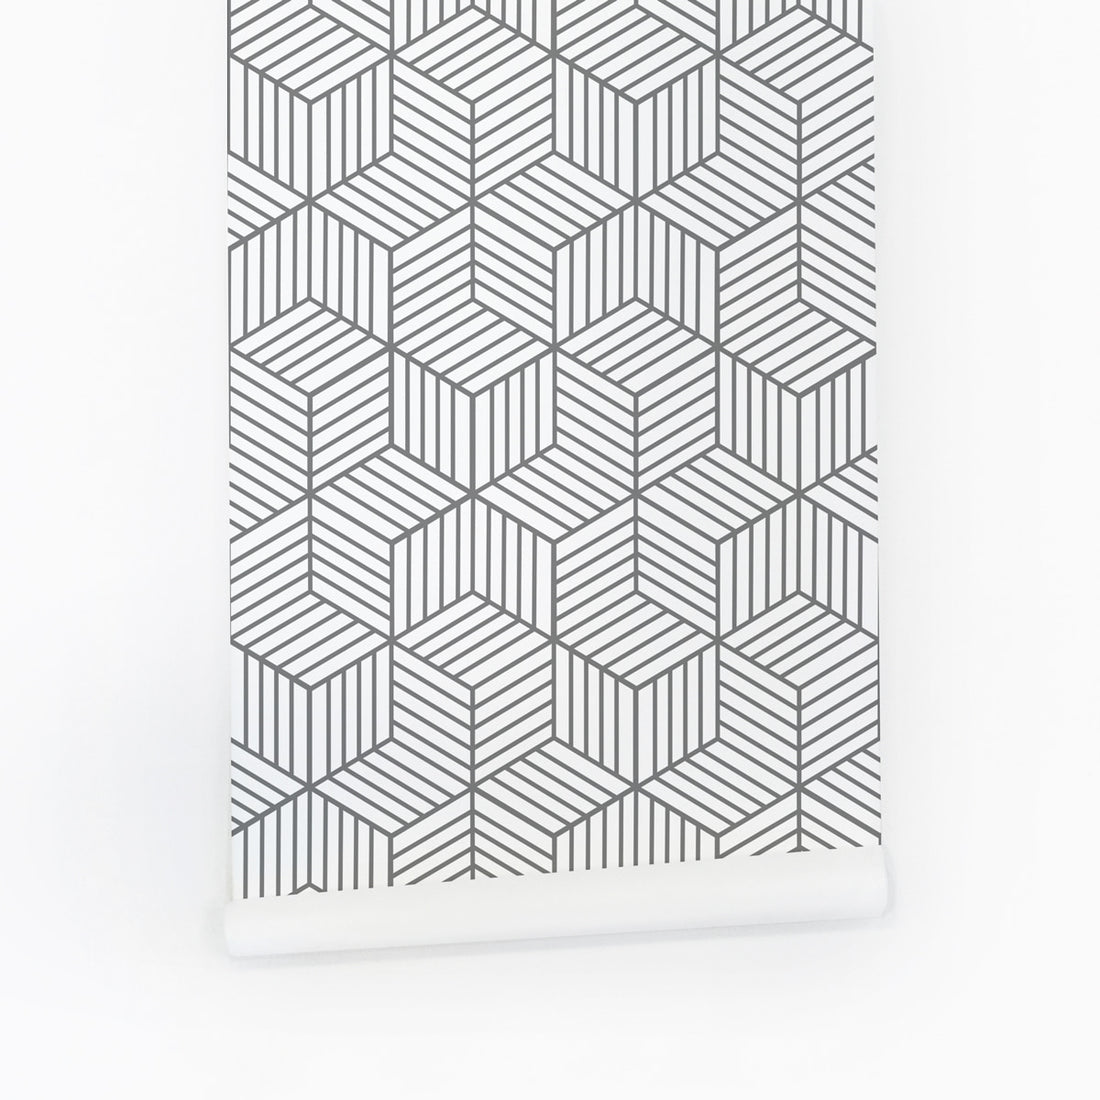 grey stripy cube pattern wallpaper for minimalistic interior            